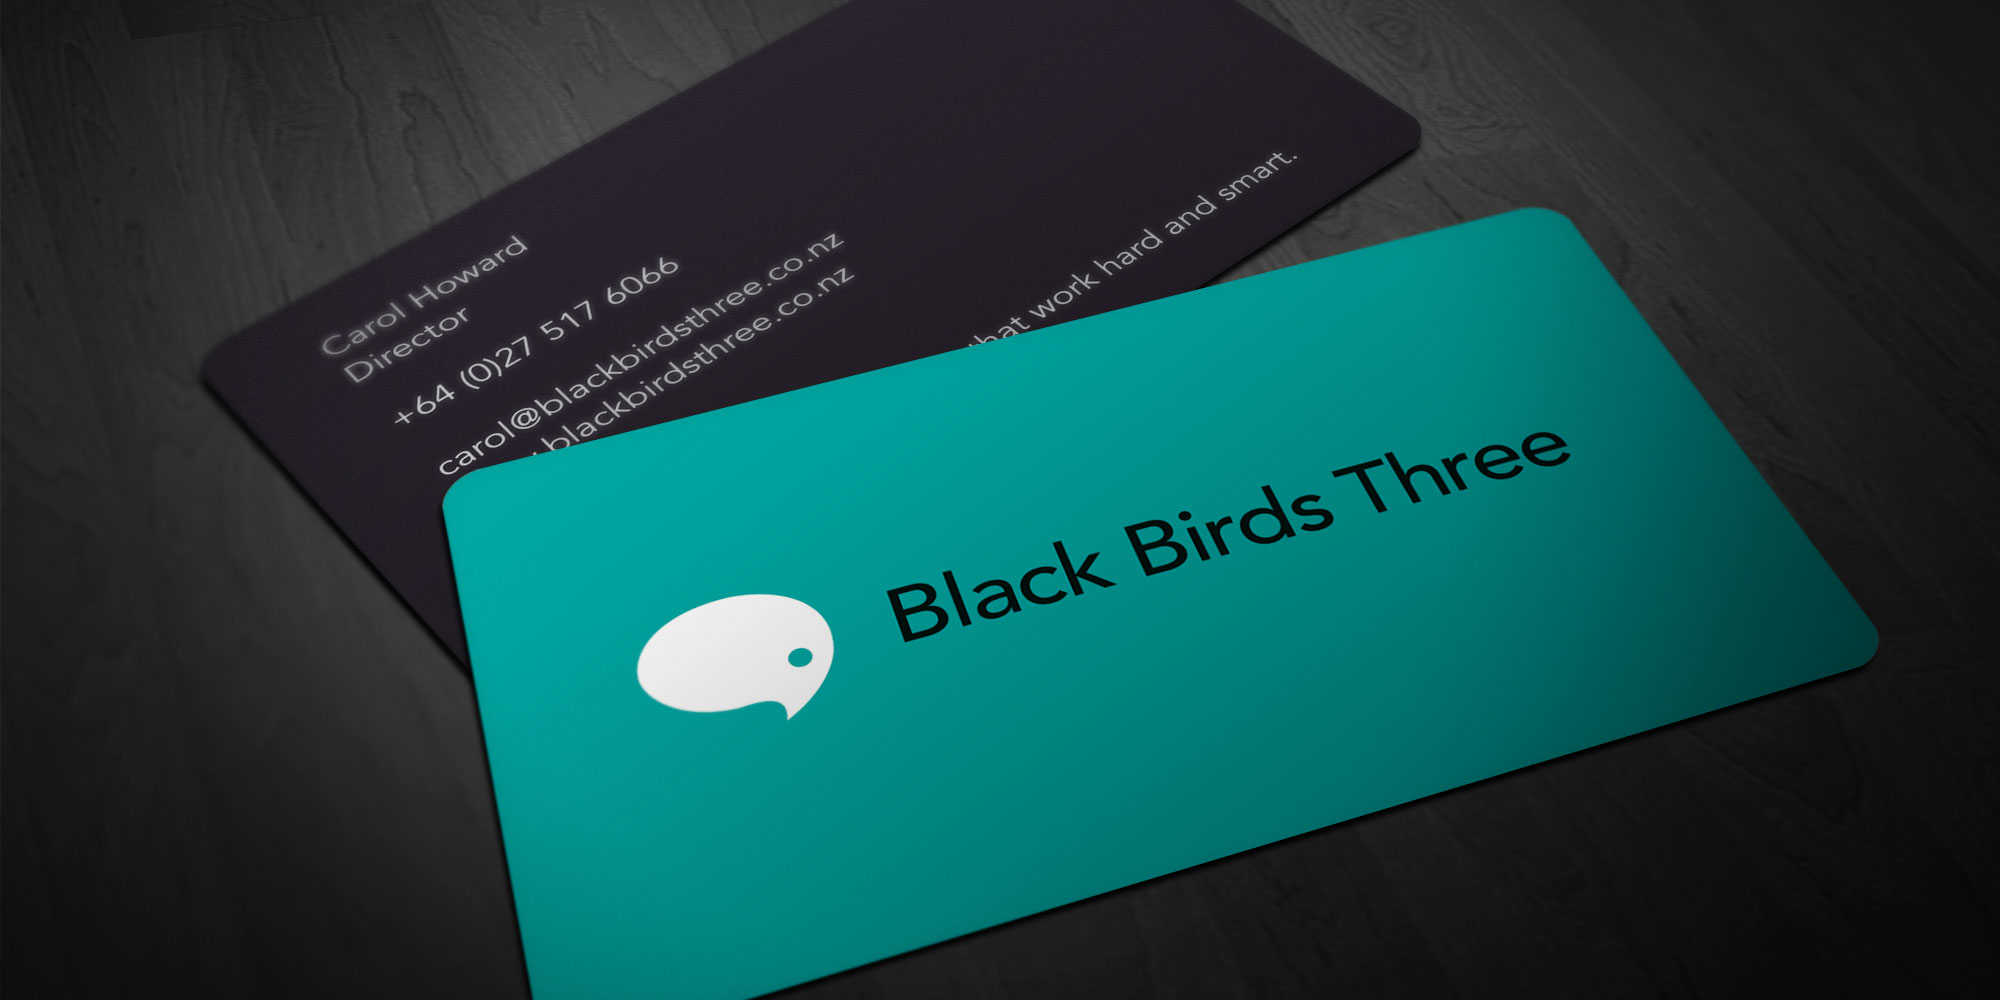 Black Birds Three